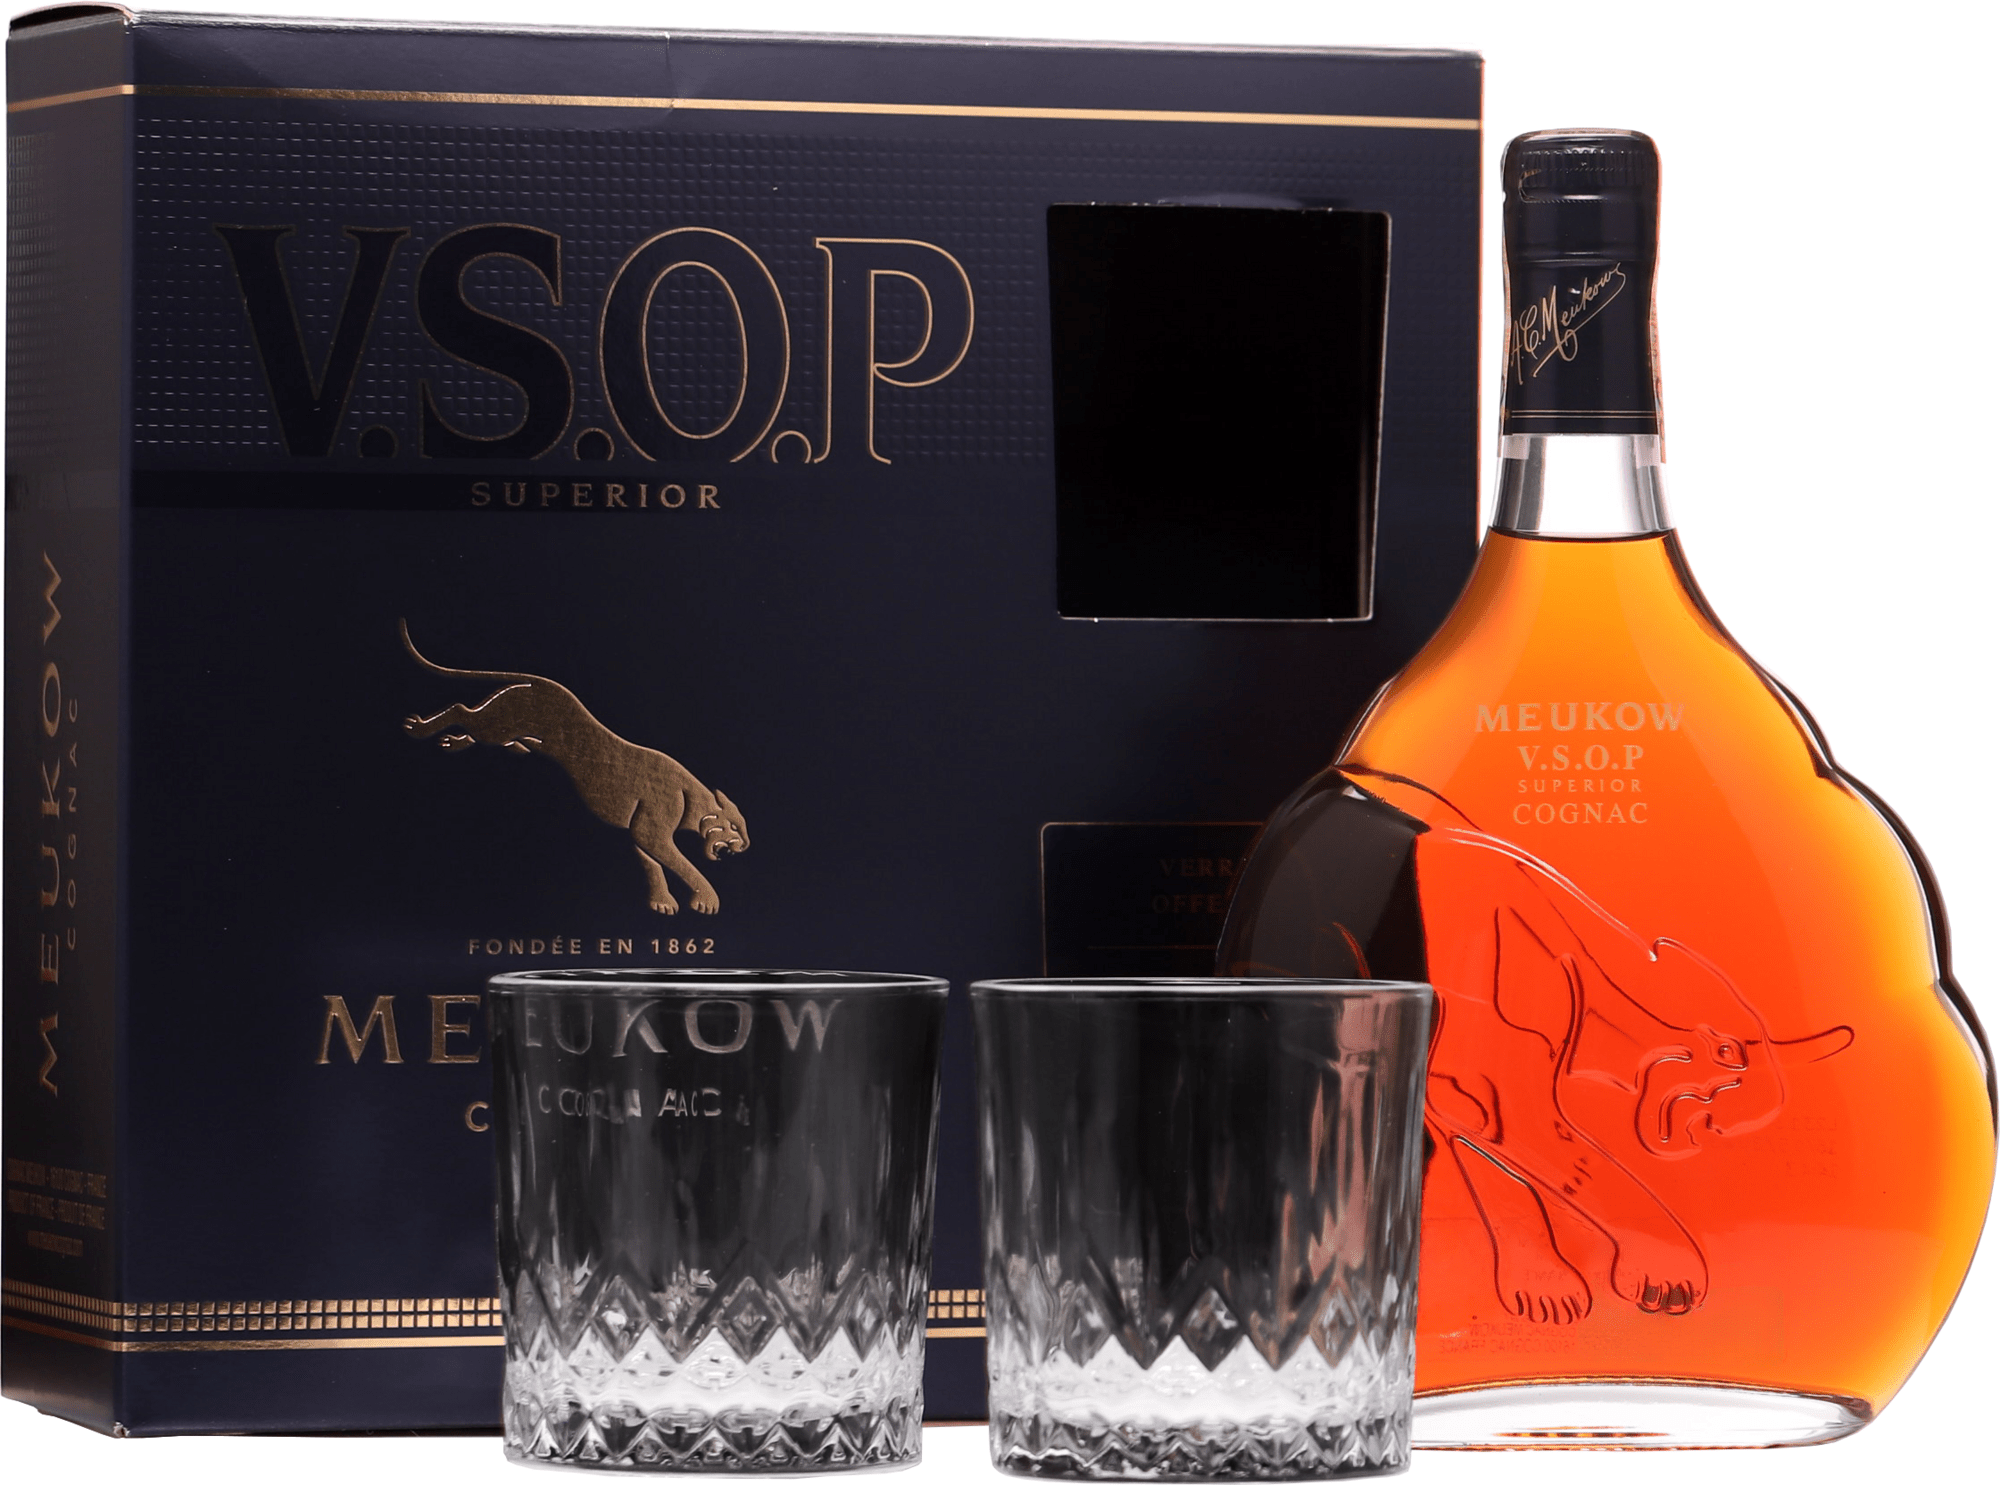 Meukow VSOP Superior + 2 sklenice